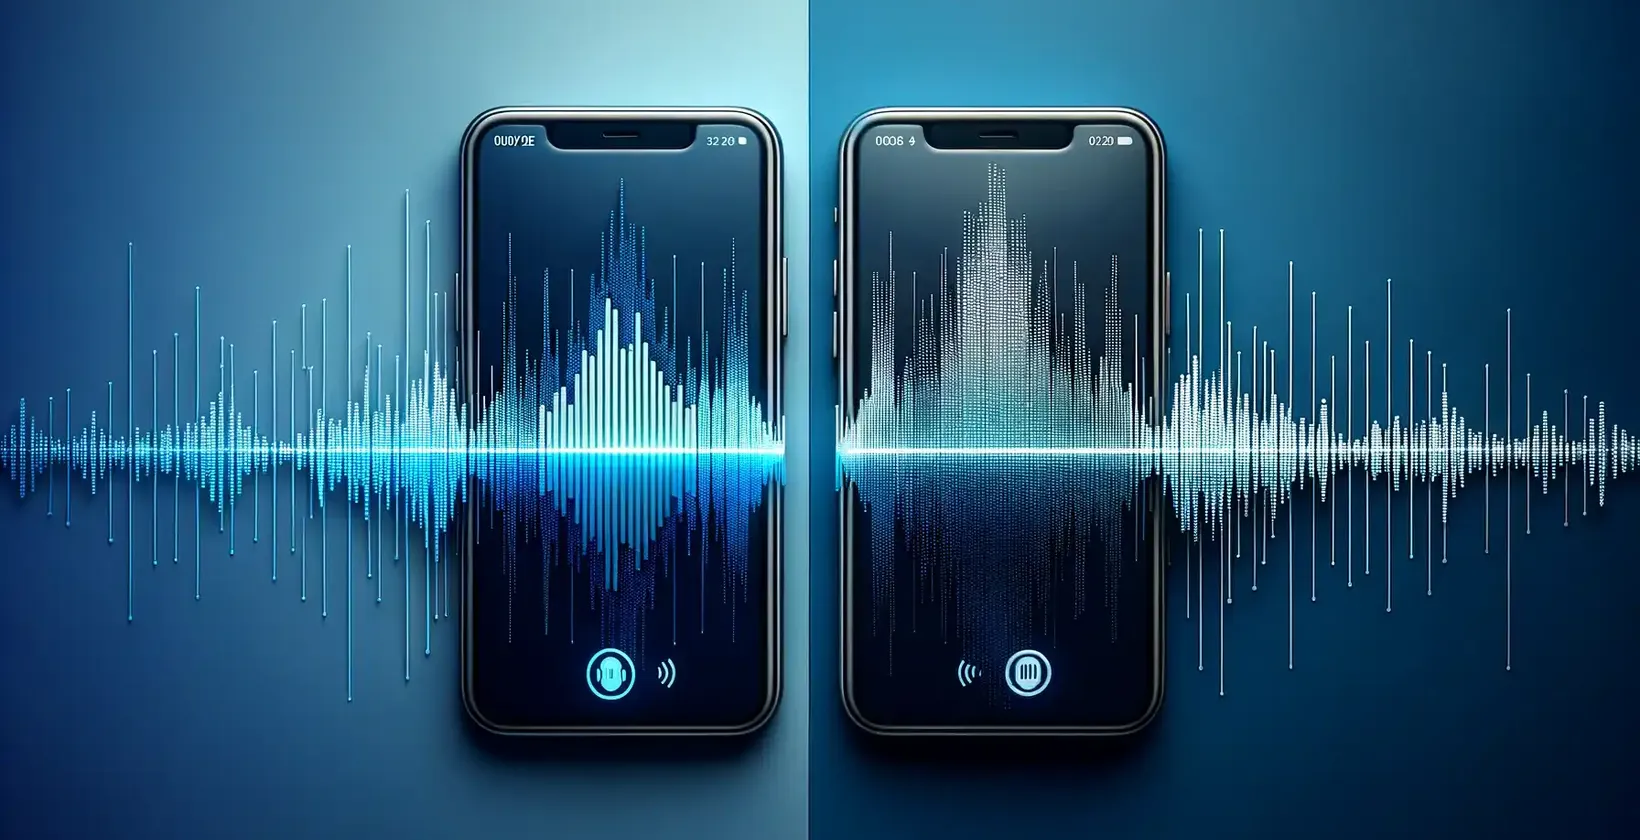 Degrade mavi arka plana karşı yan yana iki modern akıllı telefon